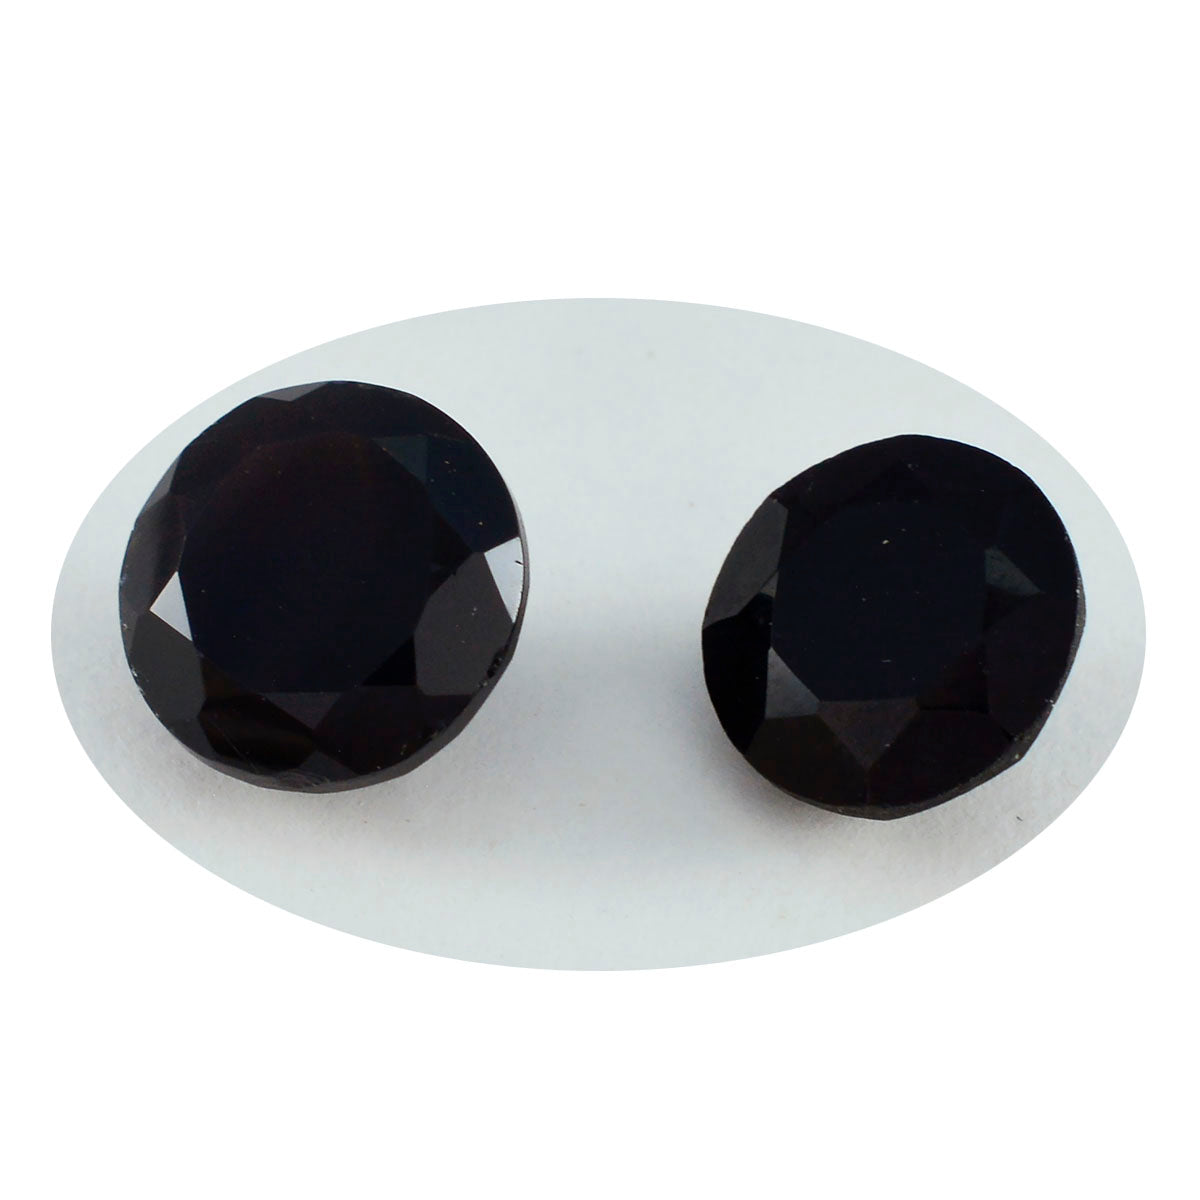 Riyogems 1PC Natural Black Onyx Faceted 13x13 mm Round Shape lovely Quality Gem